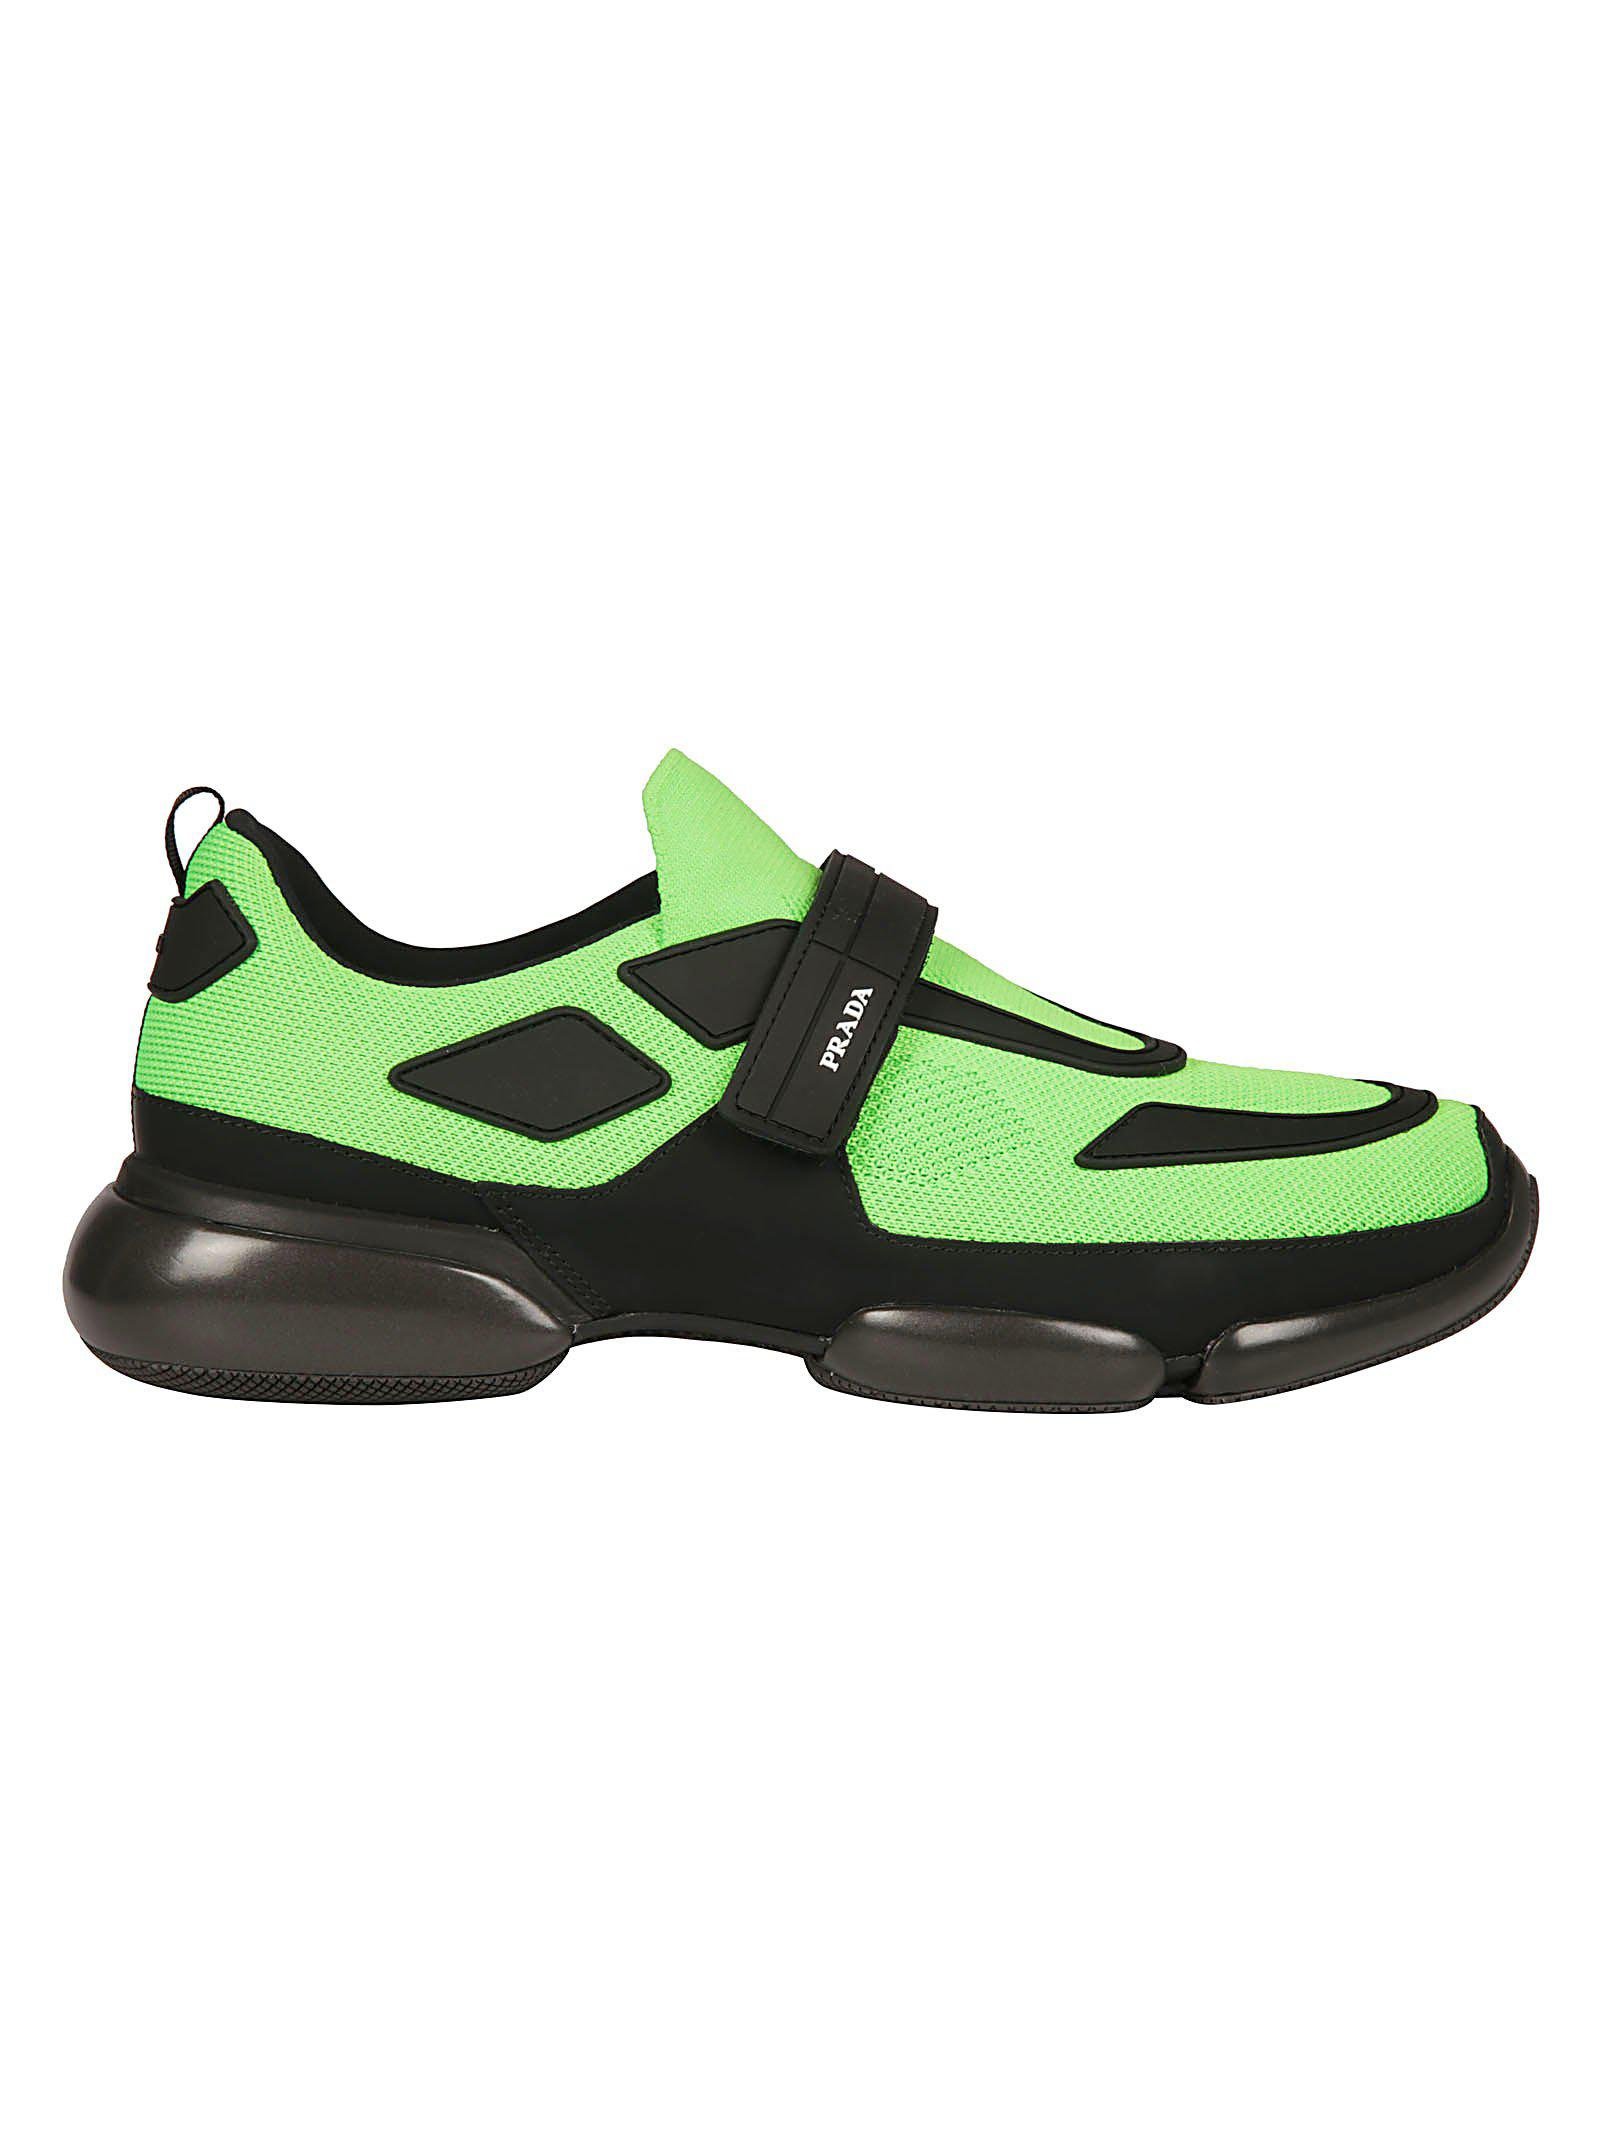 prada shoes green